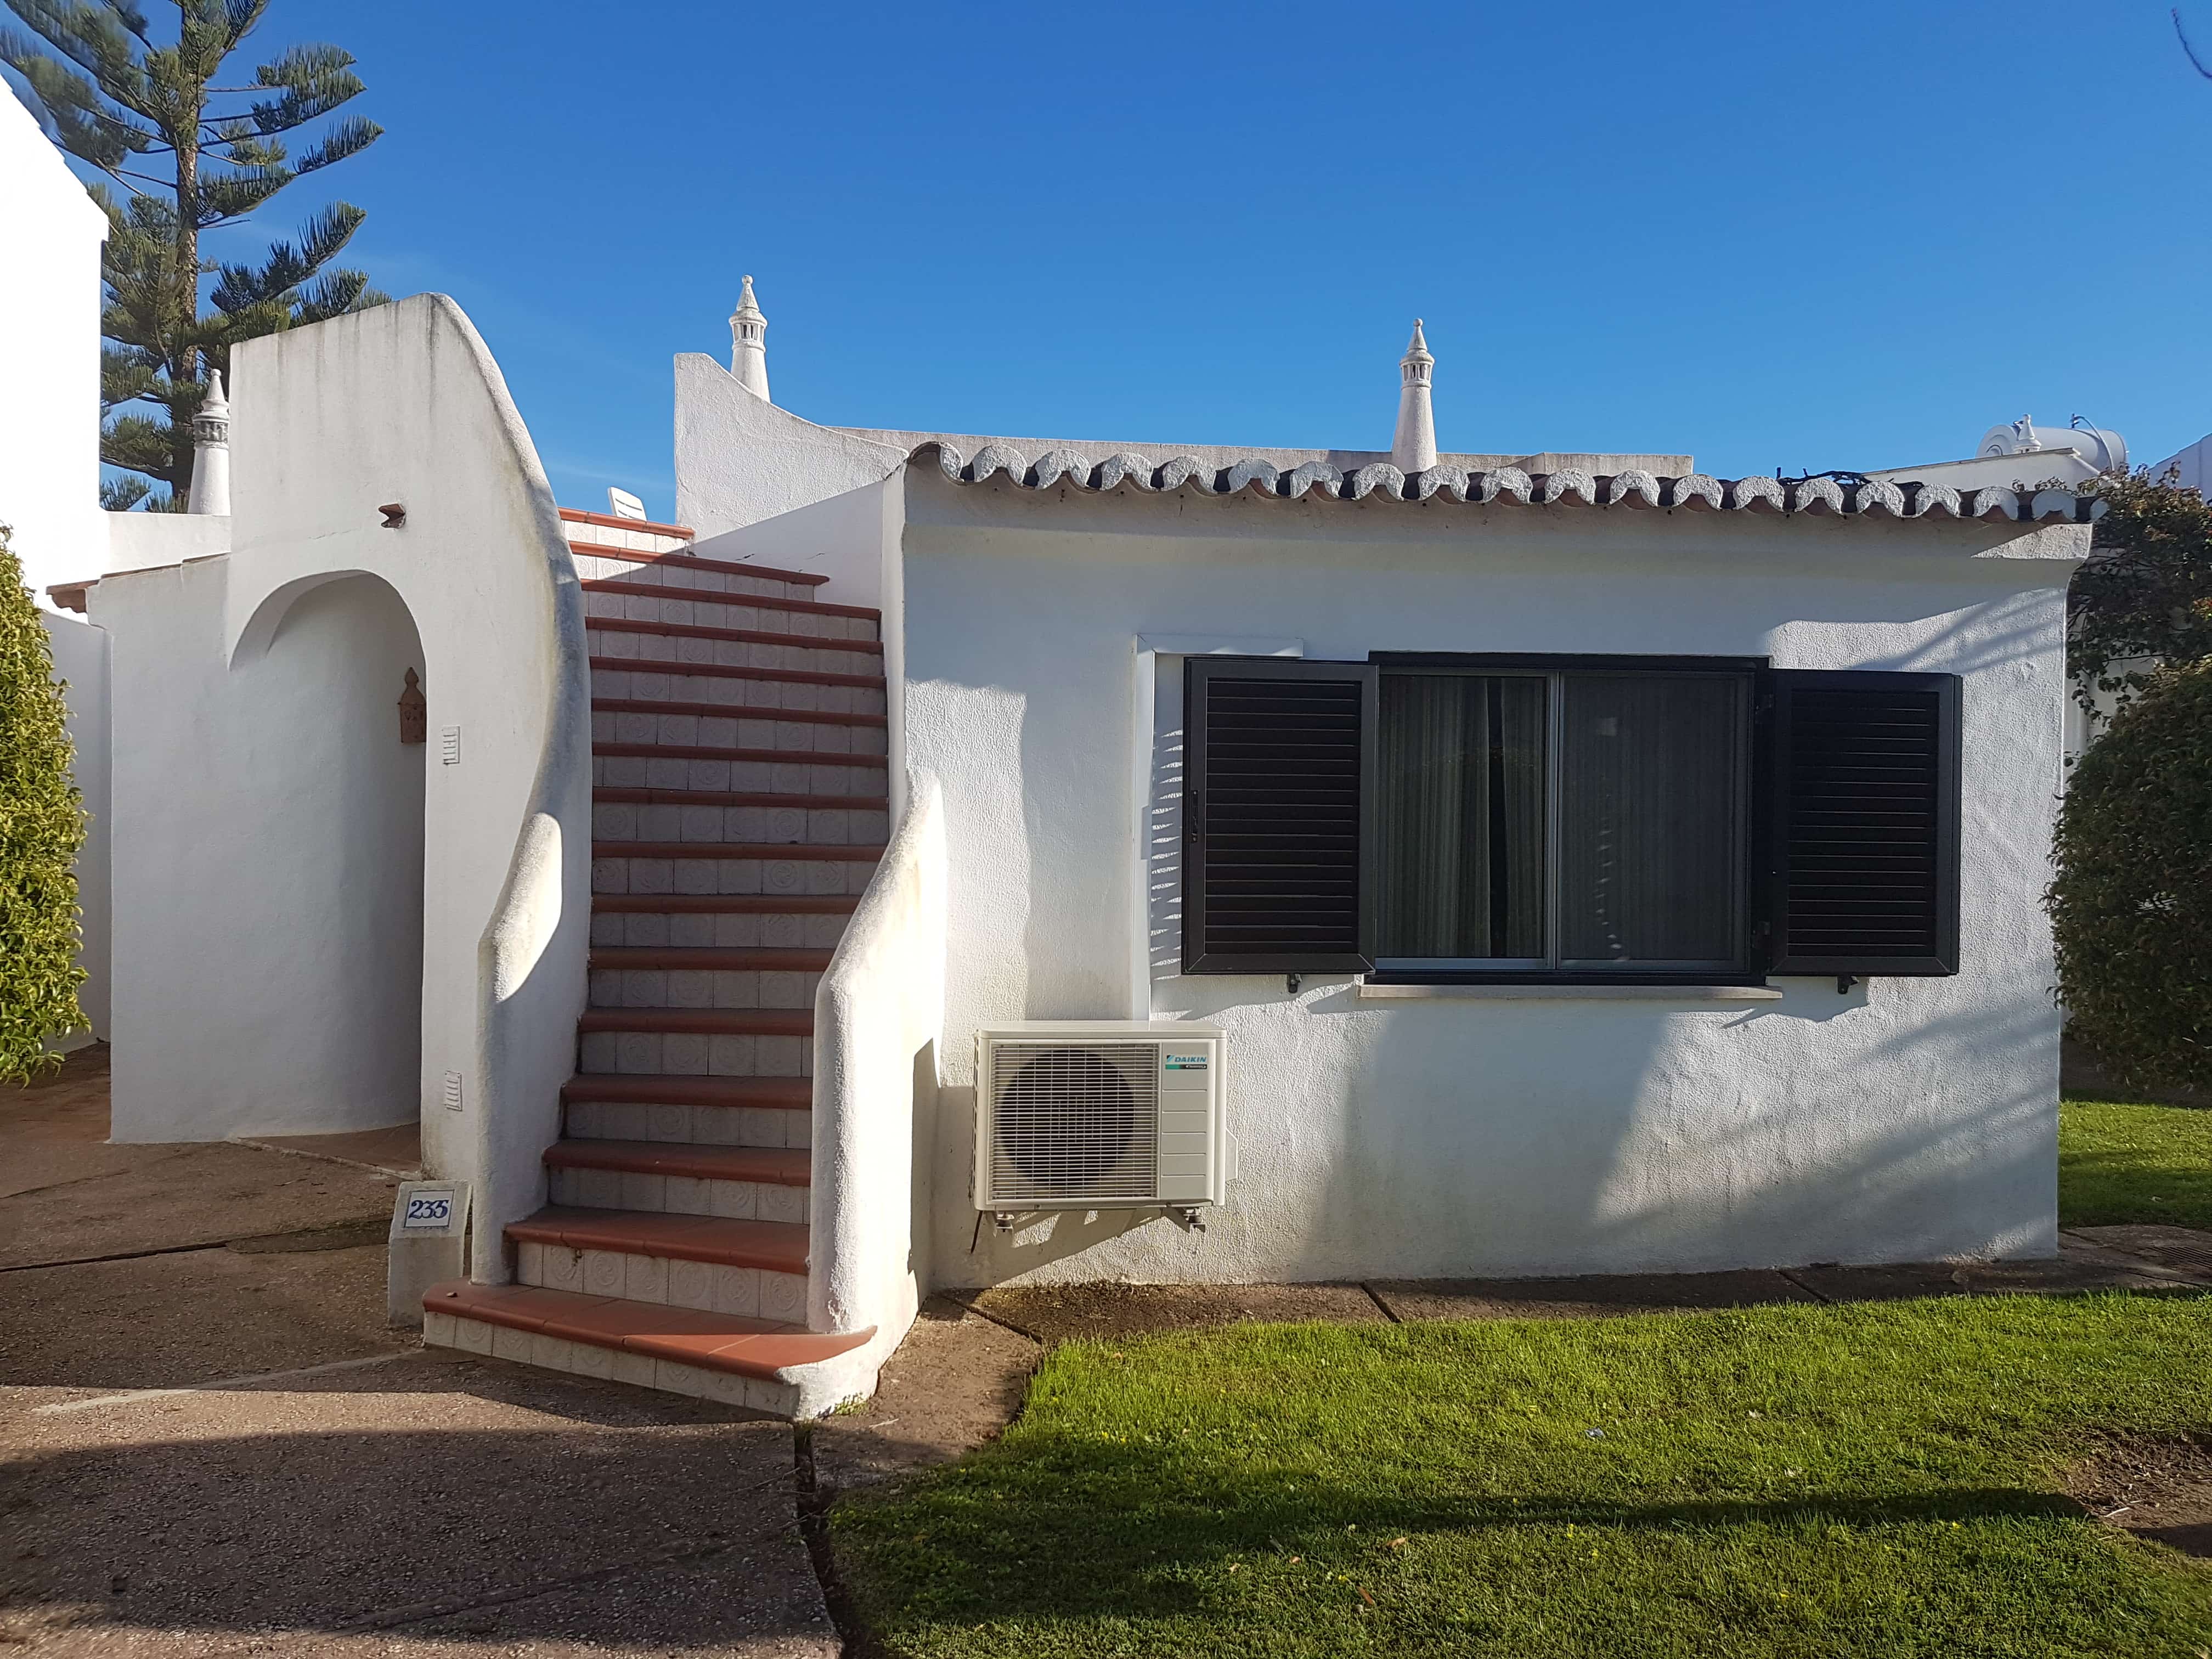 Rocha Brava Village Resort, Algarve, Portugal